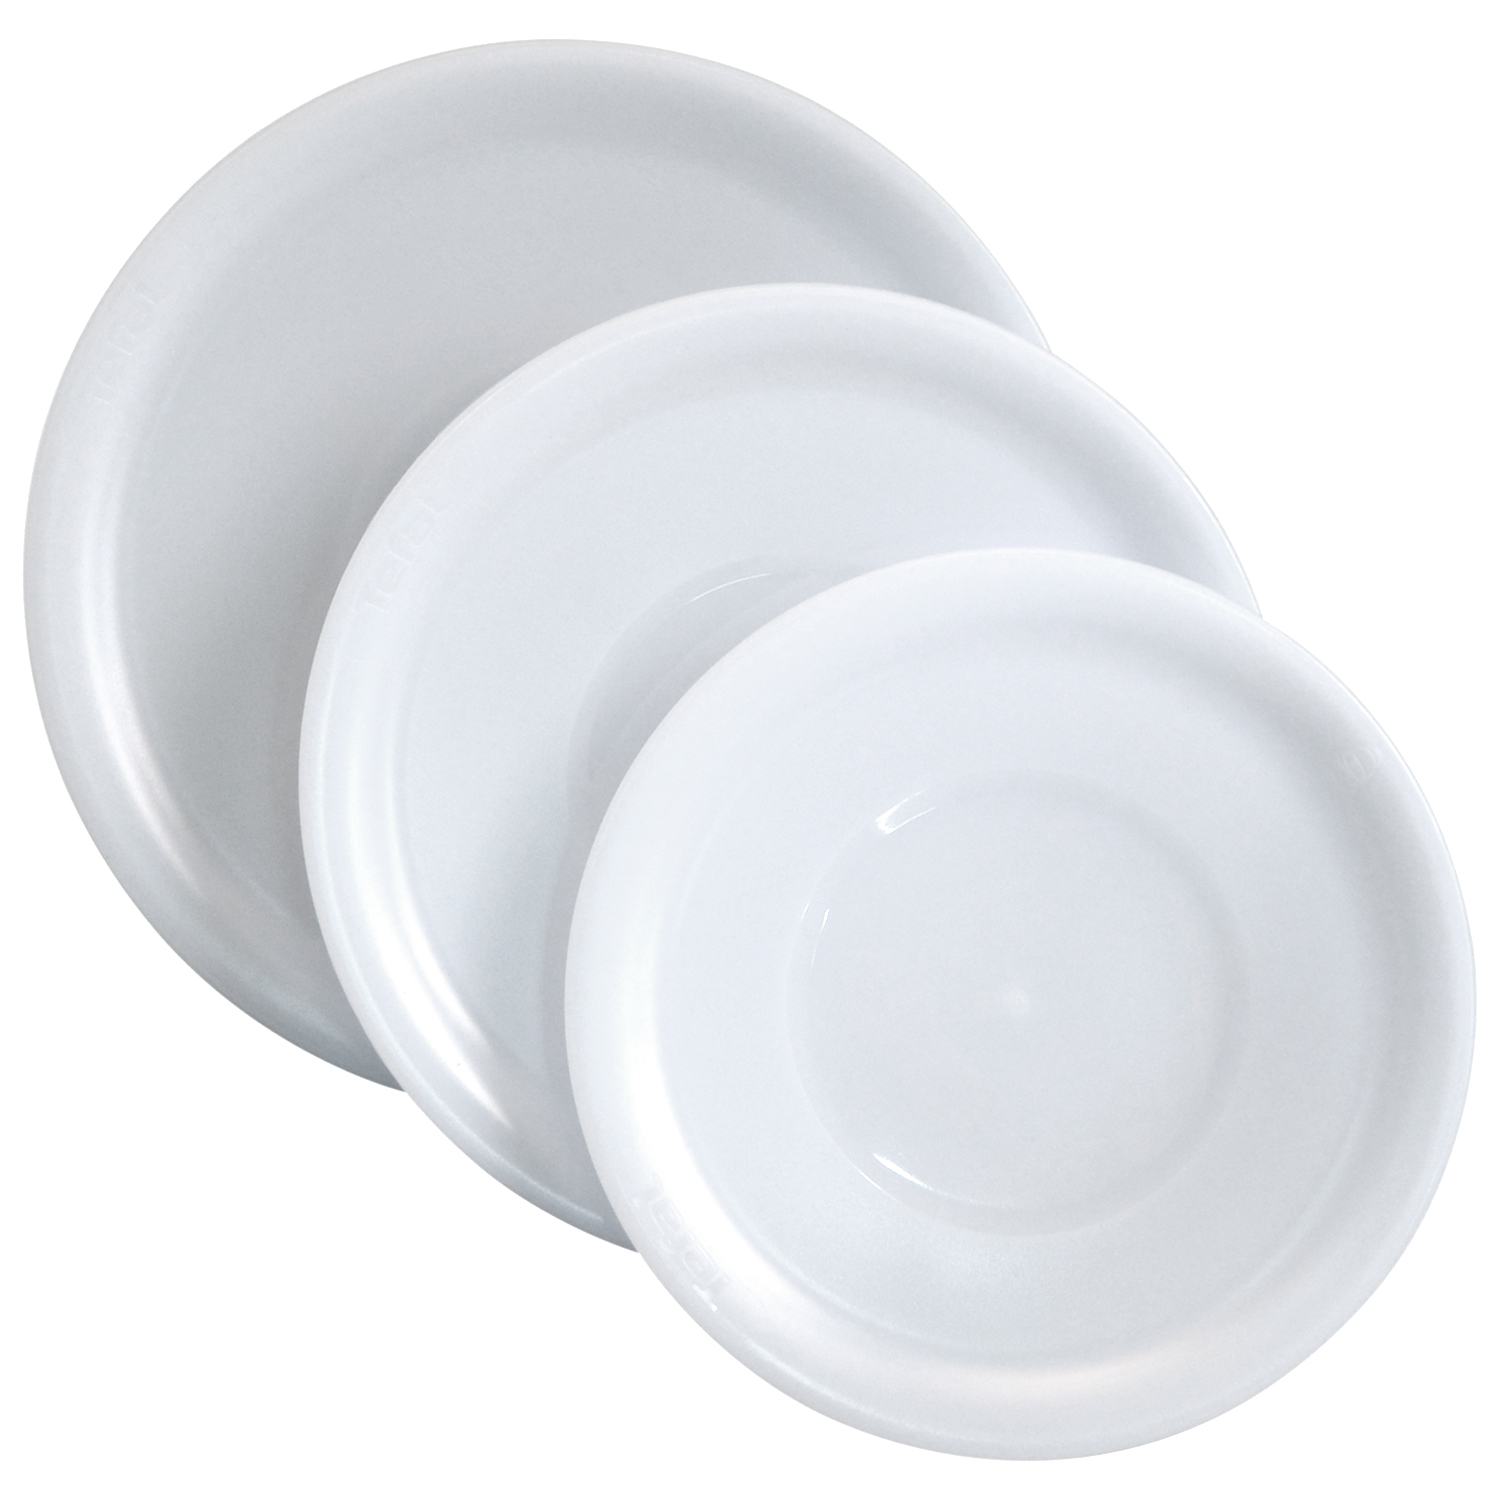 Tefal L9019222 Ingenio Plastic Lids (Set of 3) - White, 16/18/20 cm